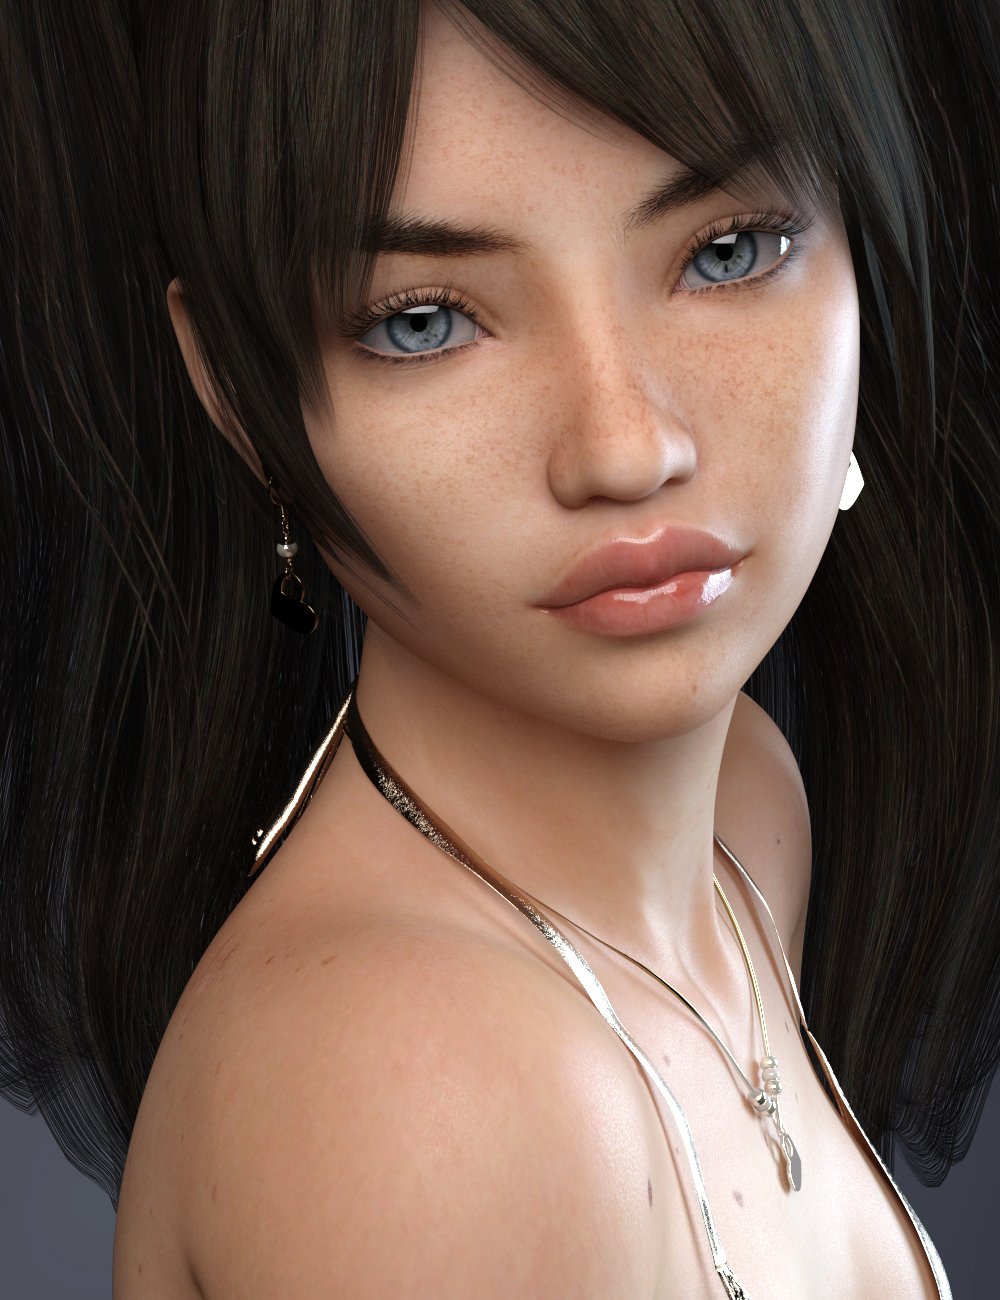 P3D Angel HD for Genesis 3 Female by: P3Design, 3D Models by Daz 3D